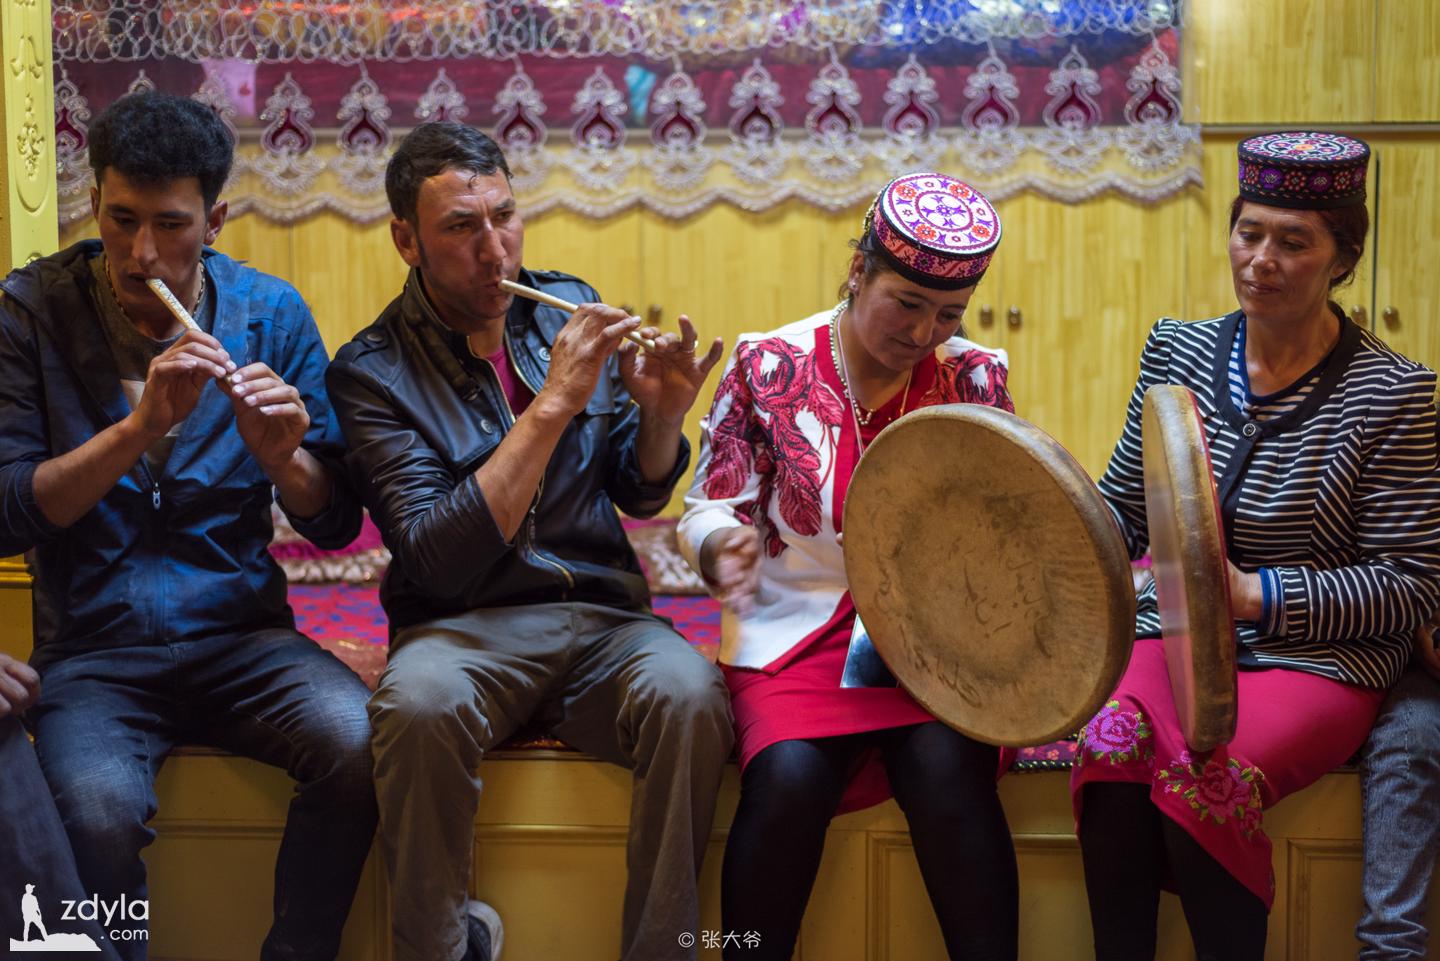 Tajik wedding - Pick up the bride